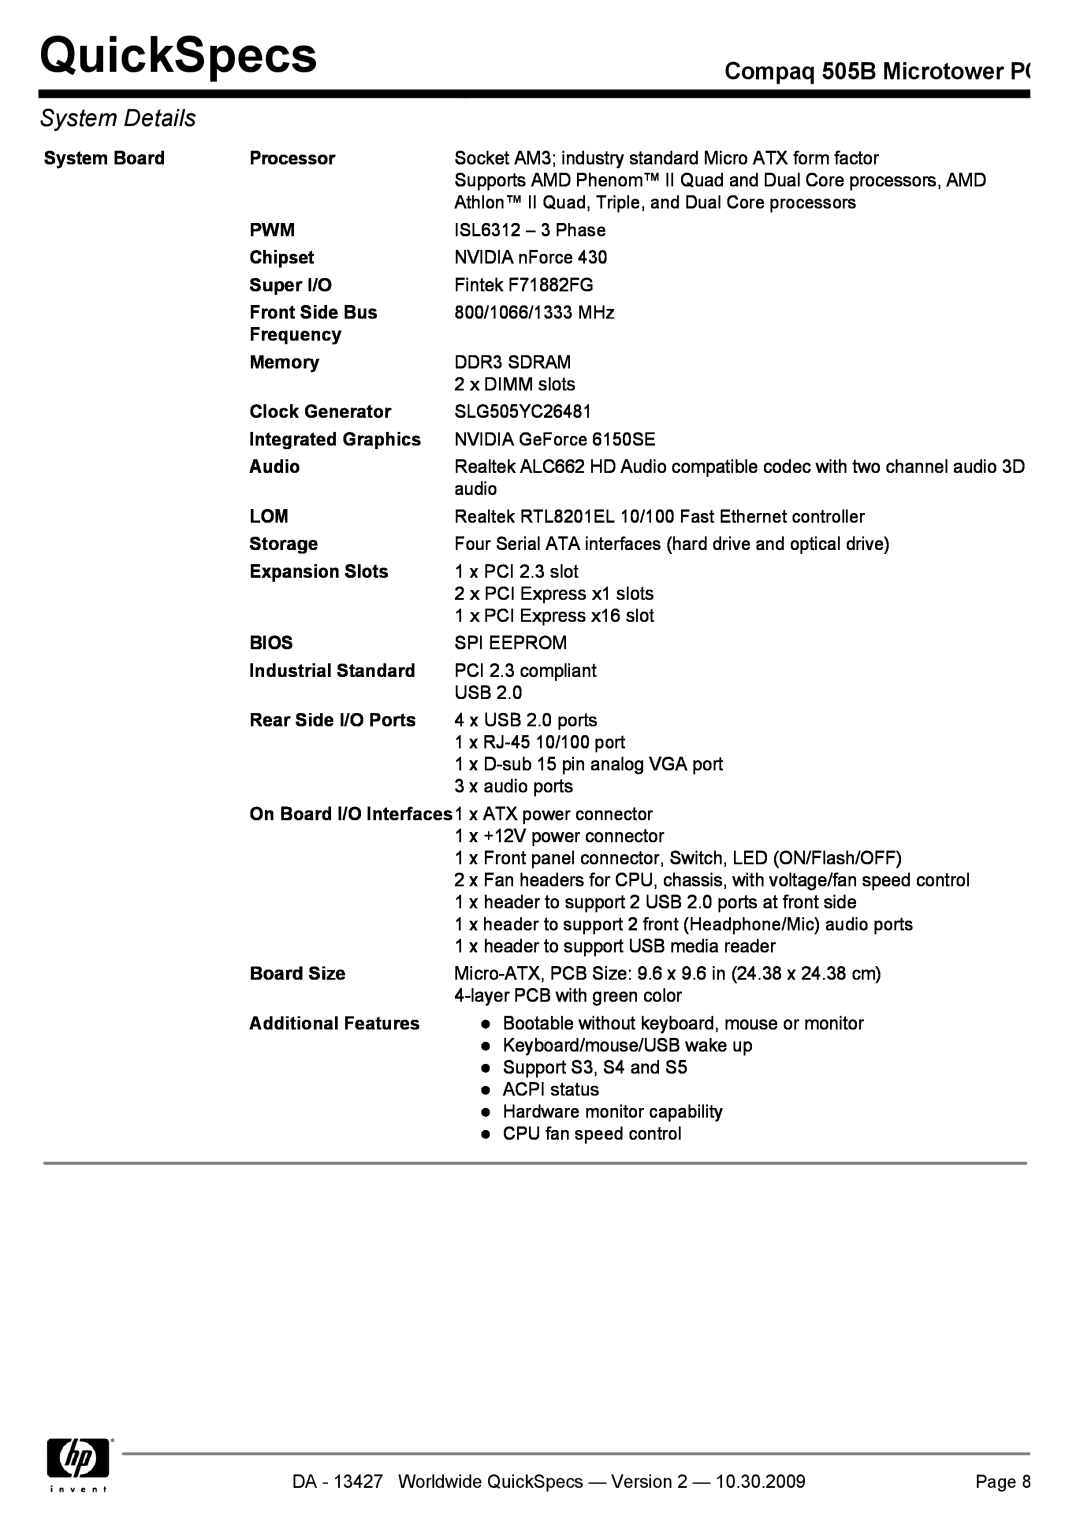 Compaq manual QuickSpecs, Compaq 505B Microtower PC, System Details 